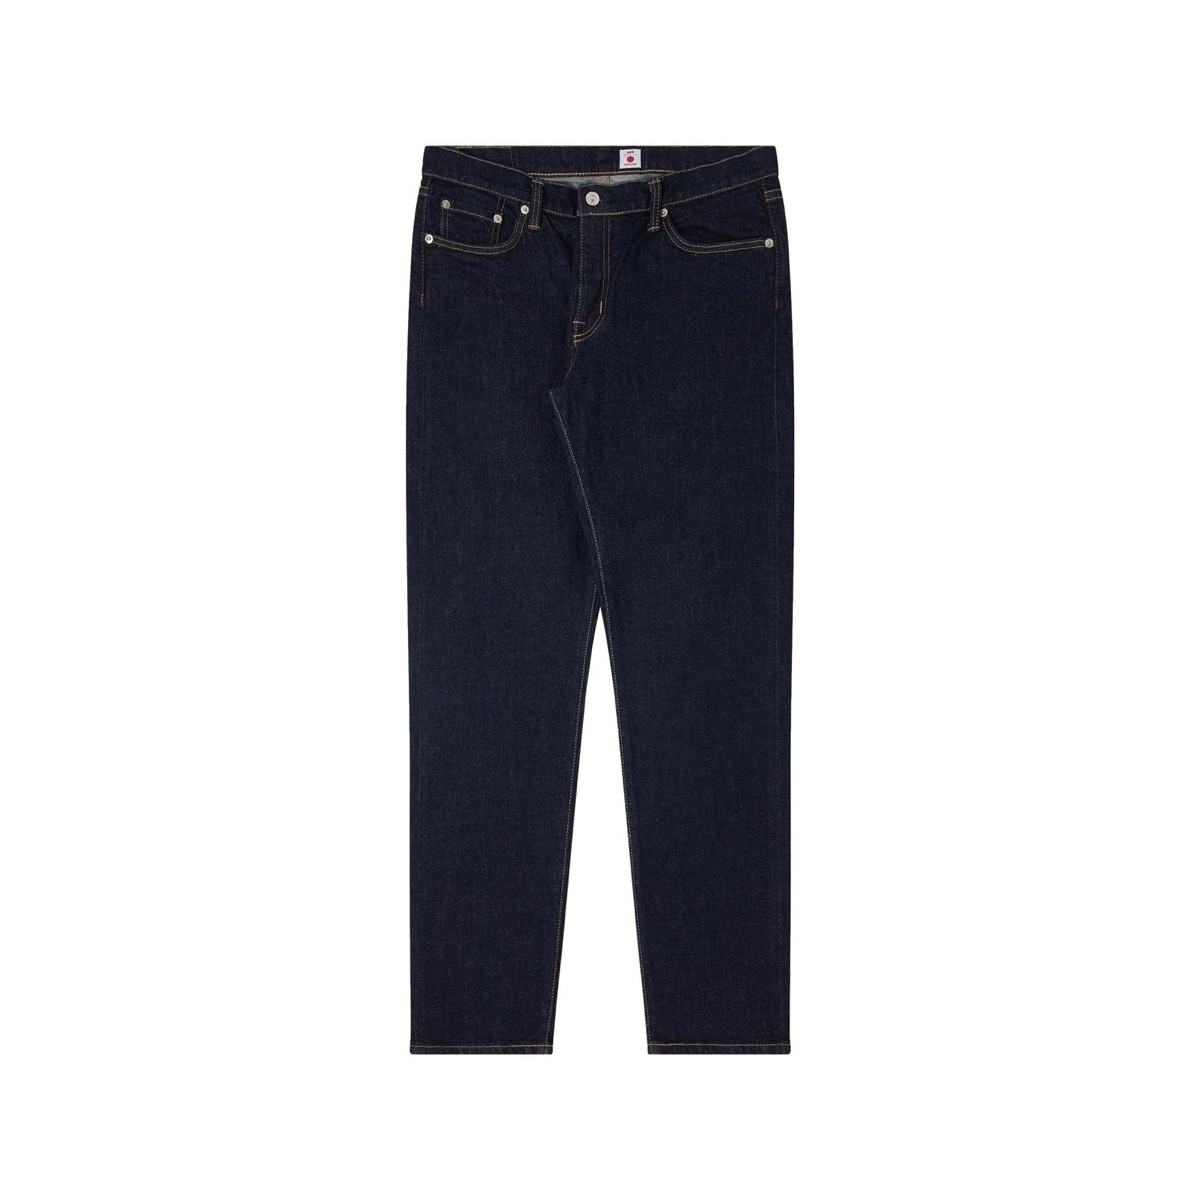 Textil Muži Kalhoty Edwin Regular Tapered Jeans - Blue Rinsed Modrá